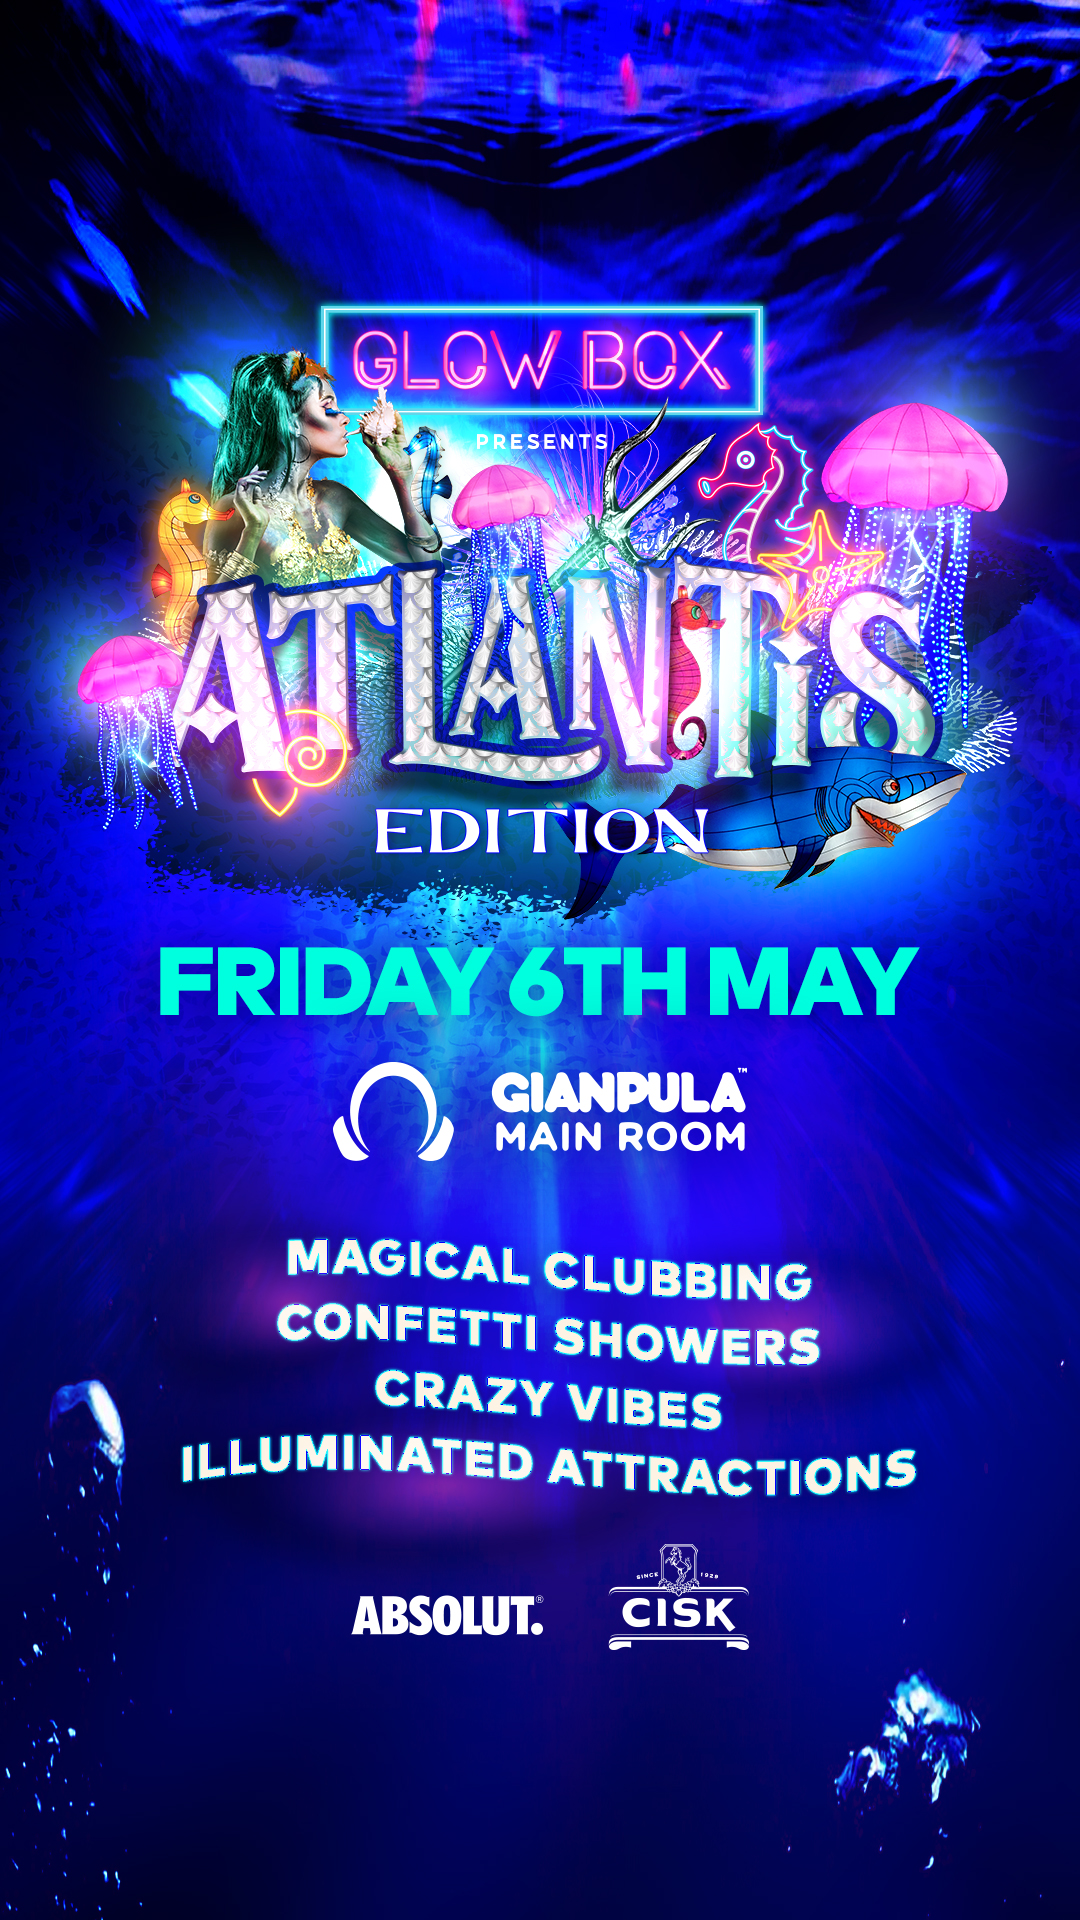 GLOW BOX Presents Atlantis Edition poster